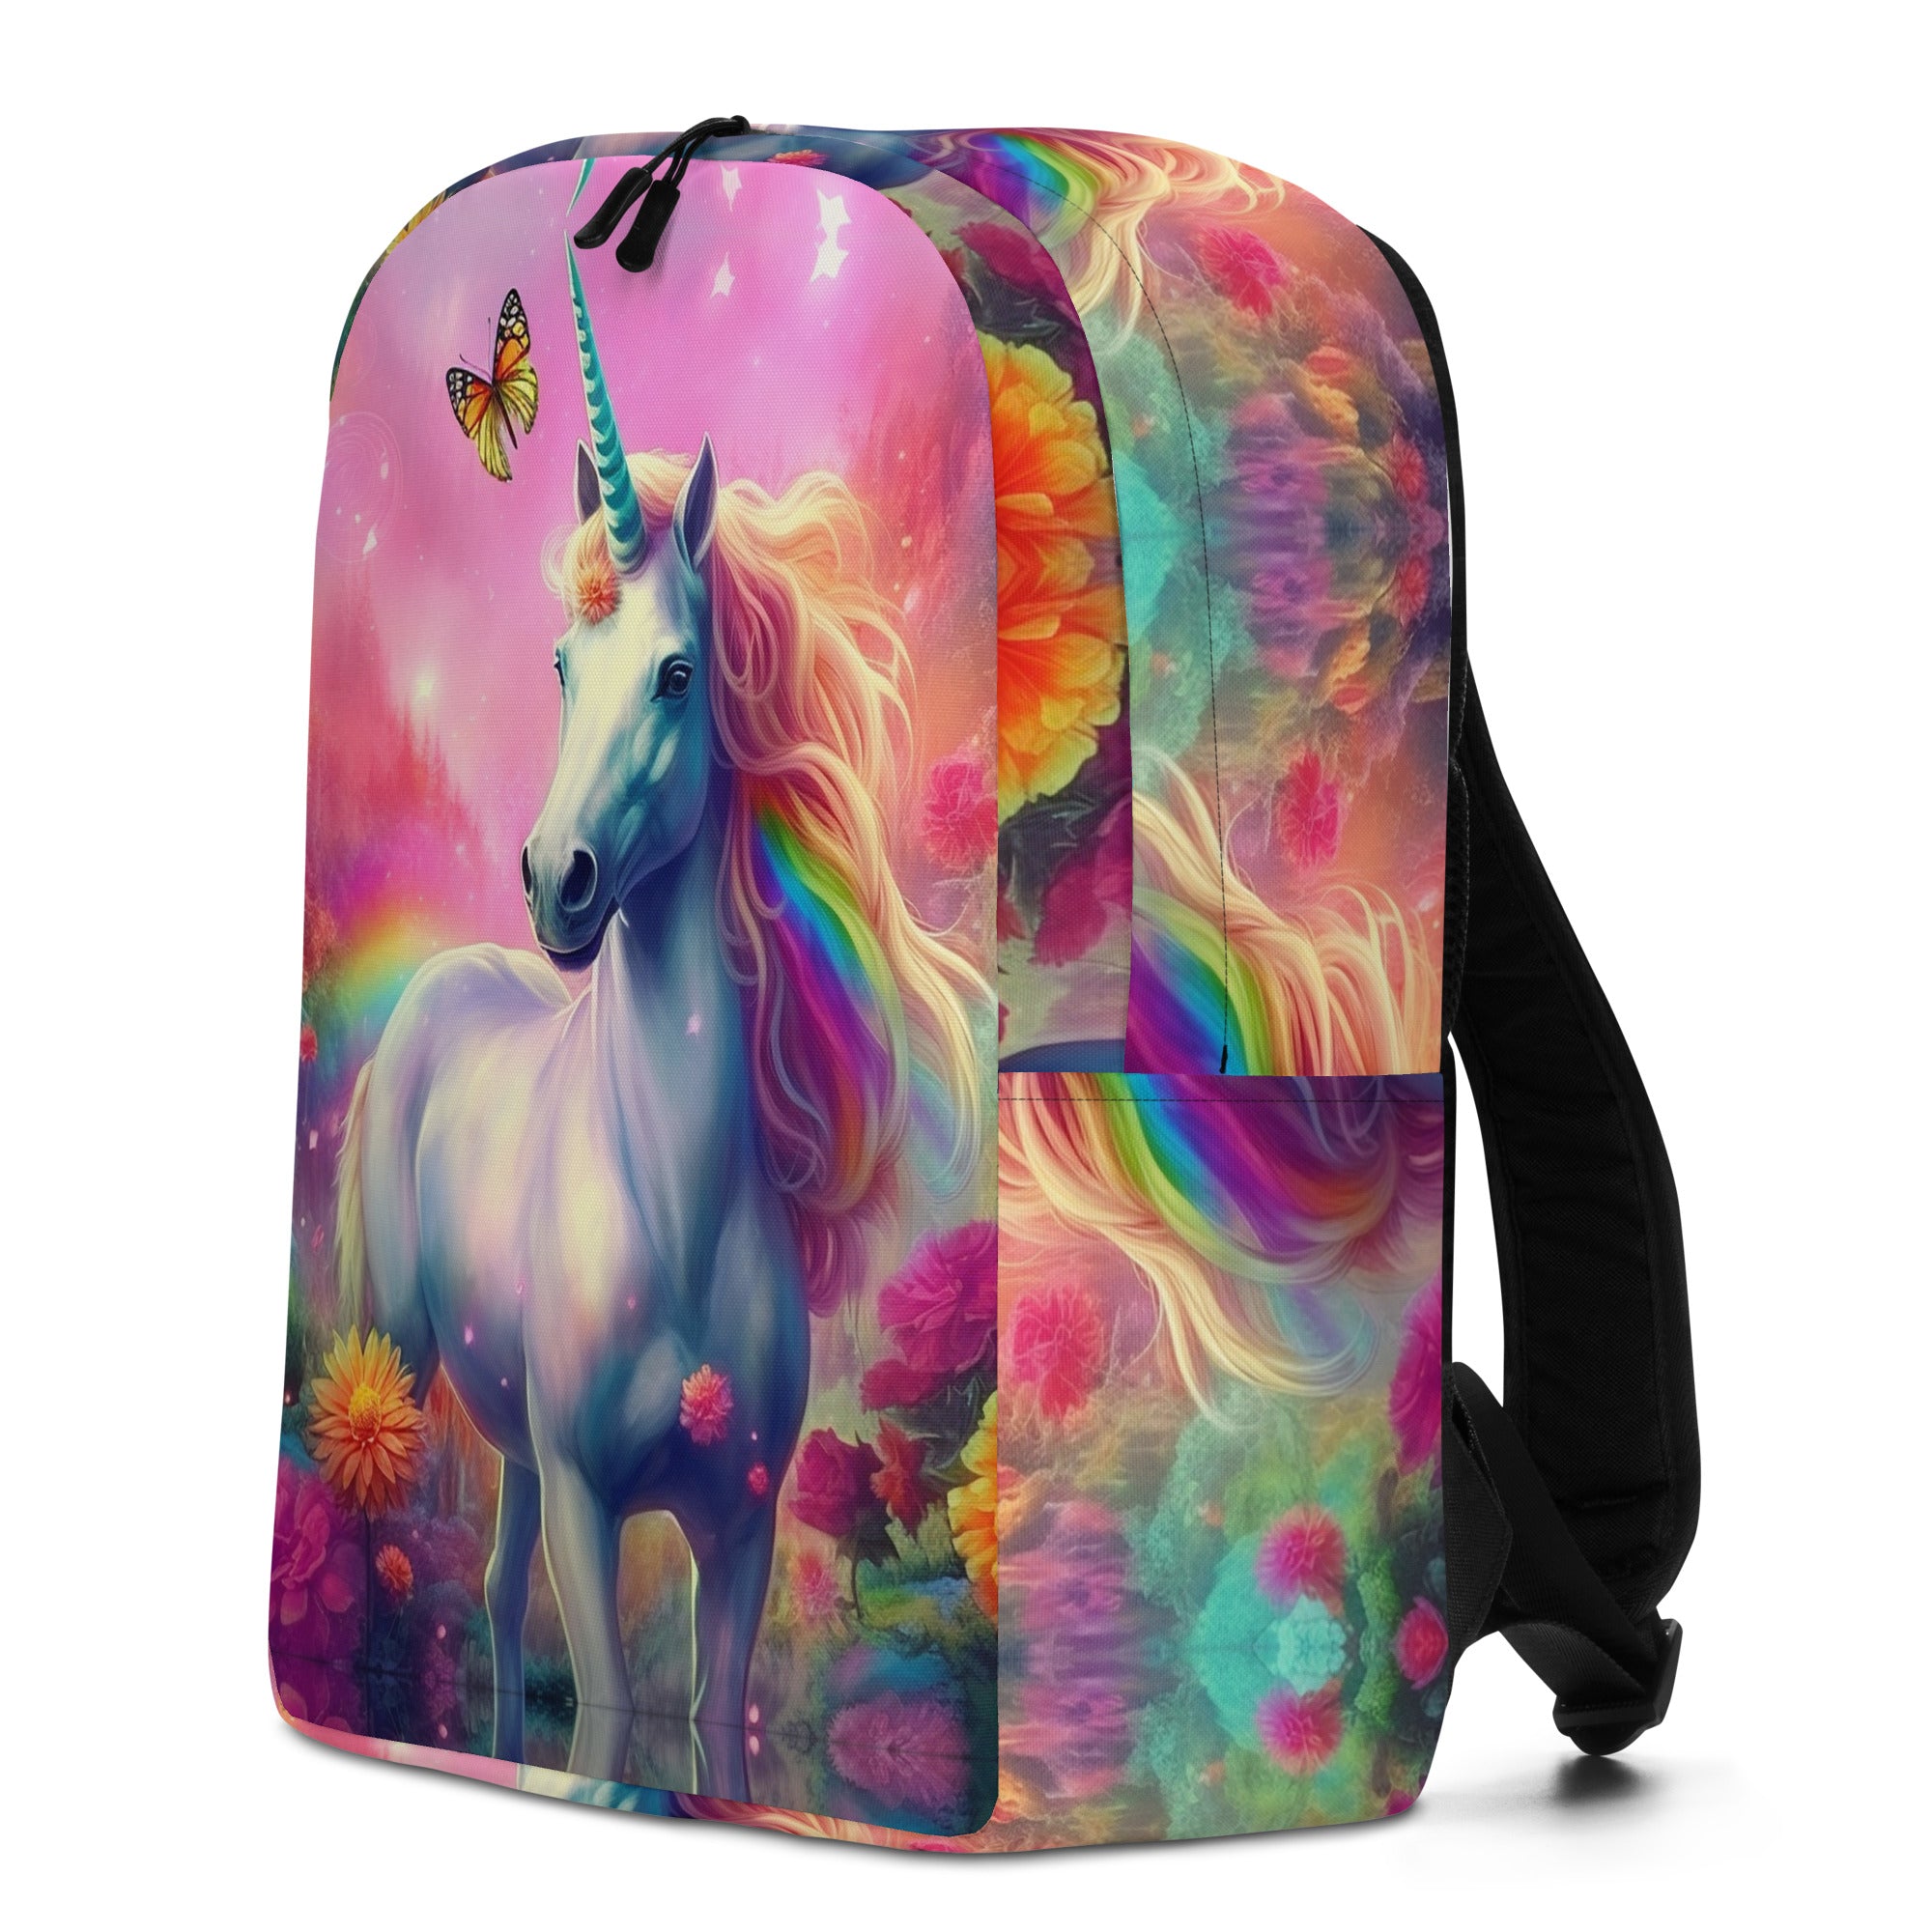 Enchanted Unicorn Fairy Style Backpack for Girls | Unicorn Back to School Bag for Princess Girls